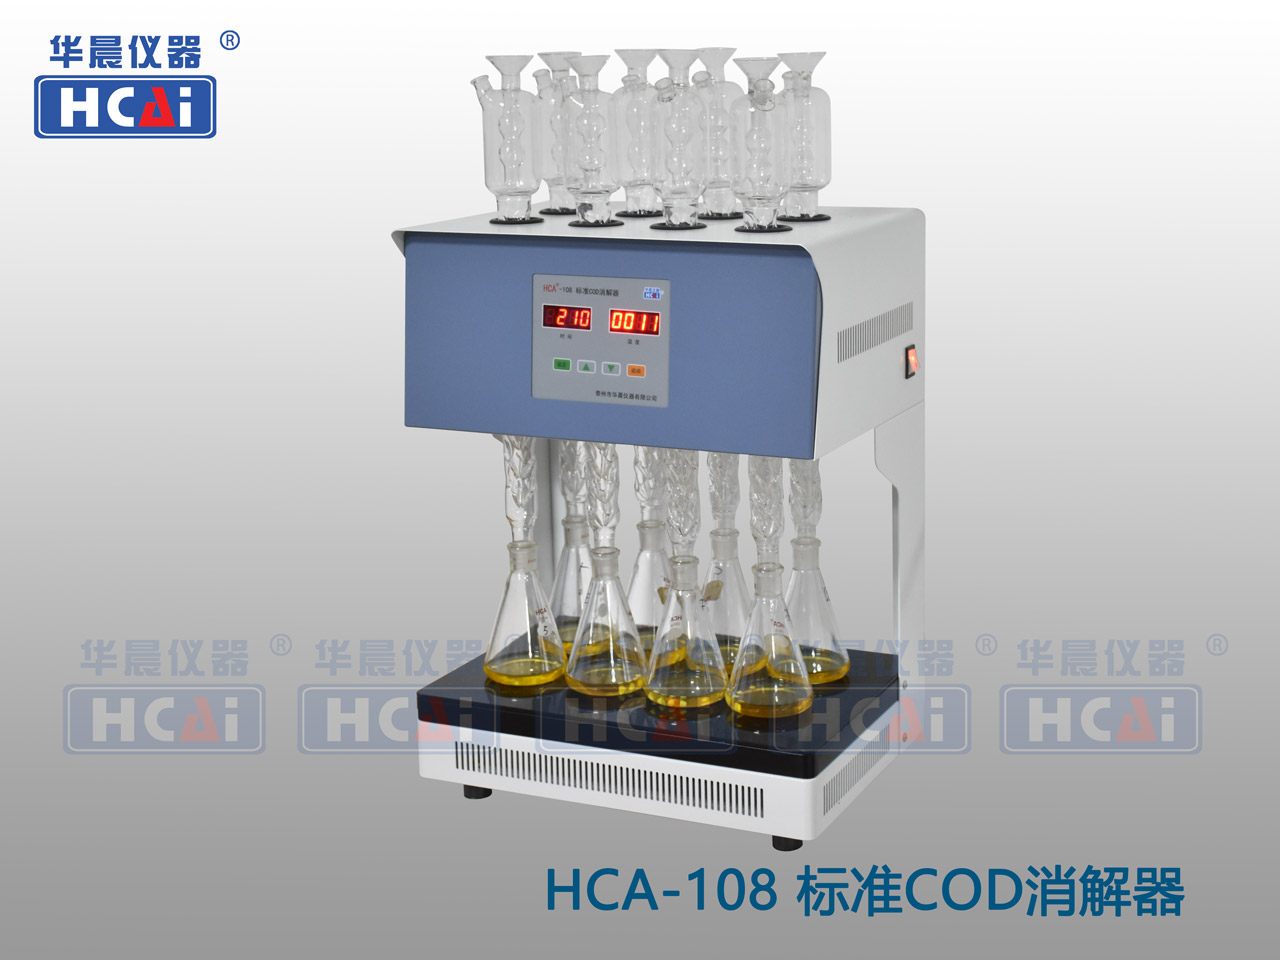 HCA-108 标准COD消解器（8管）